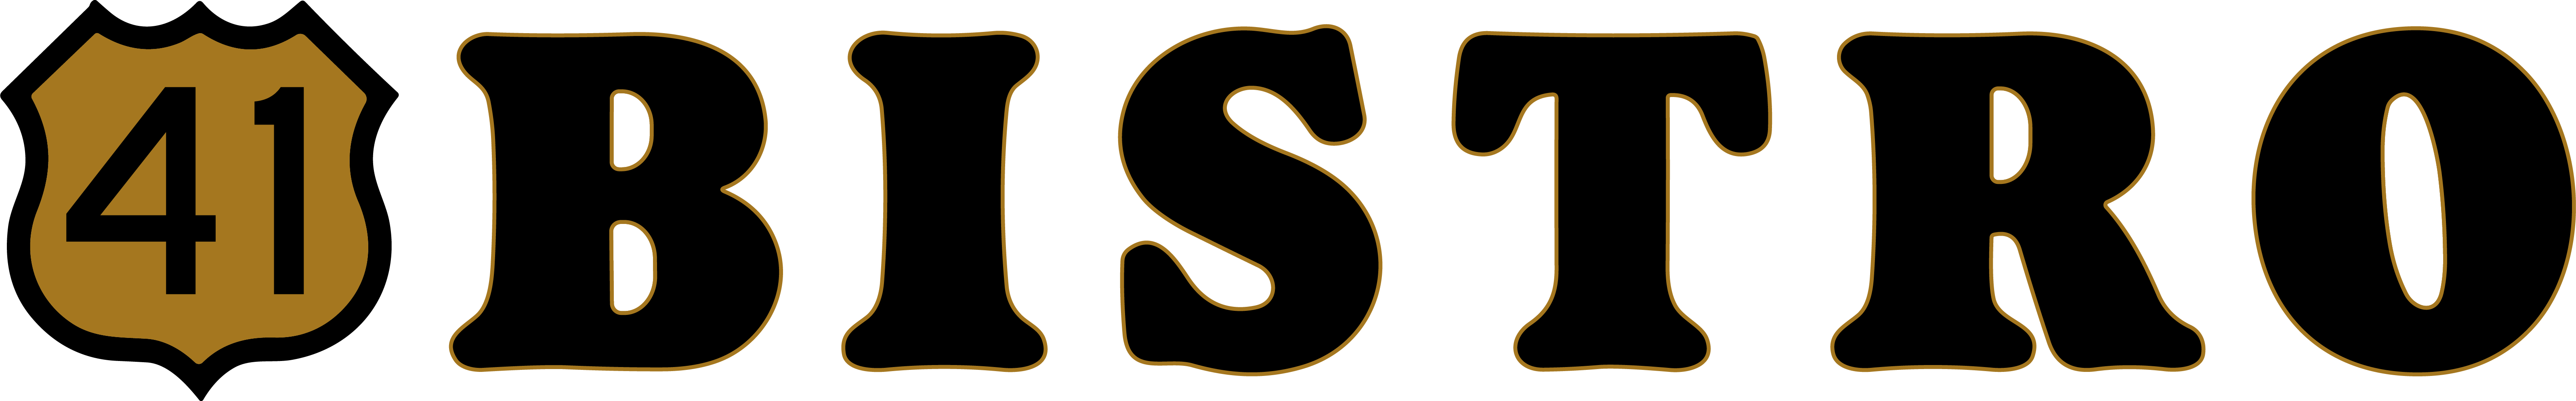 41 Bistro Logo